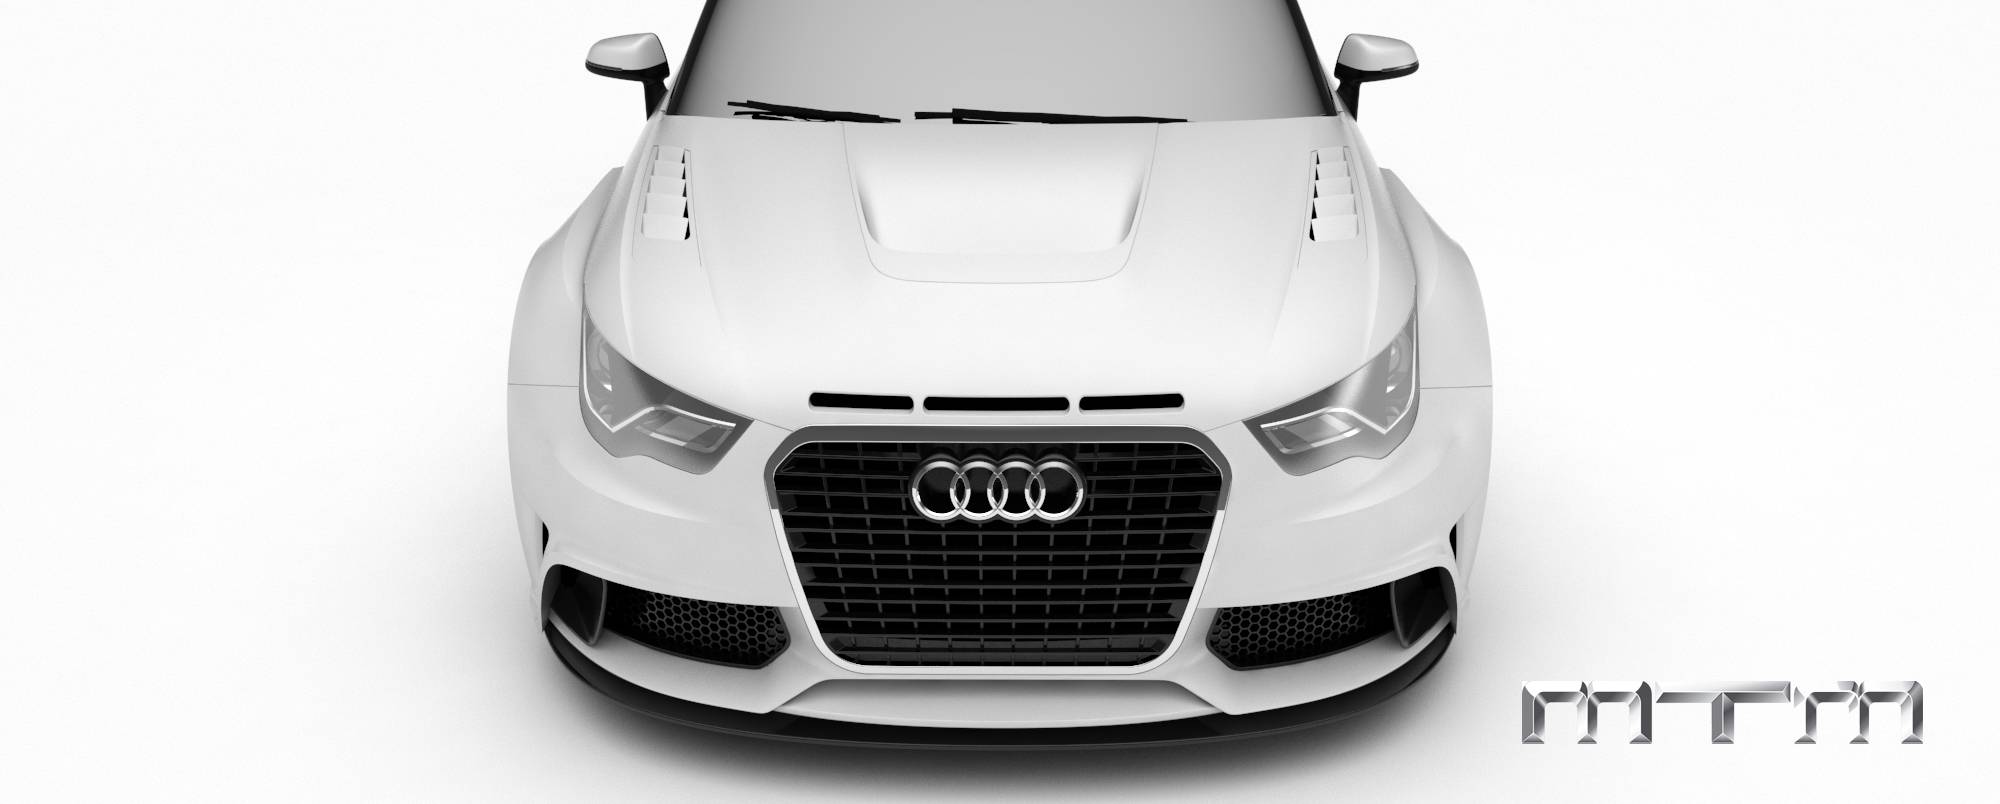 MTM показал Audi S1 Quattro Group В